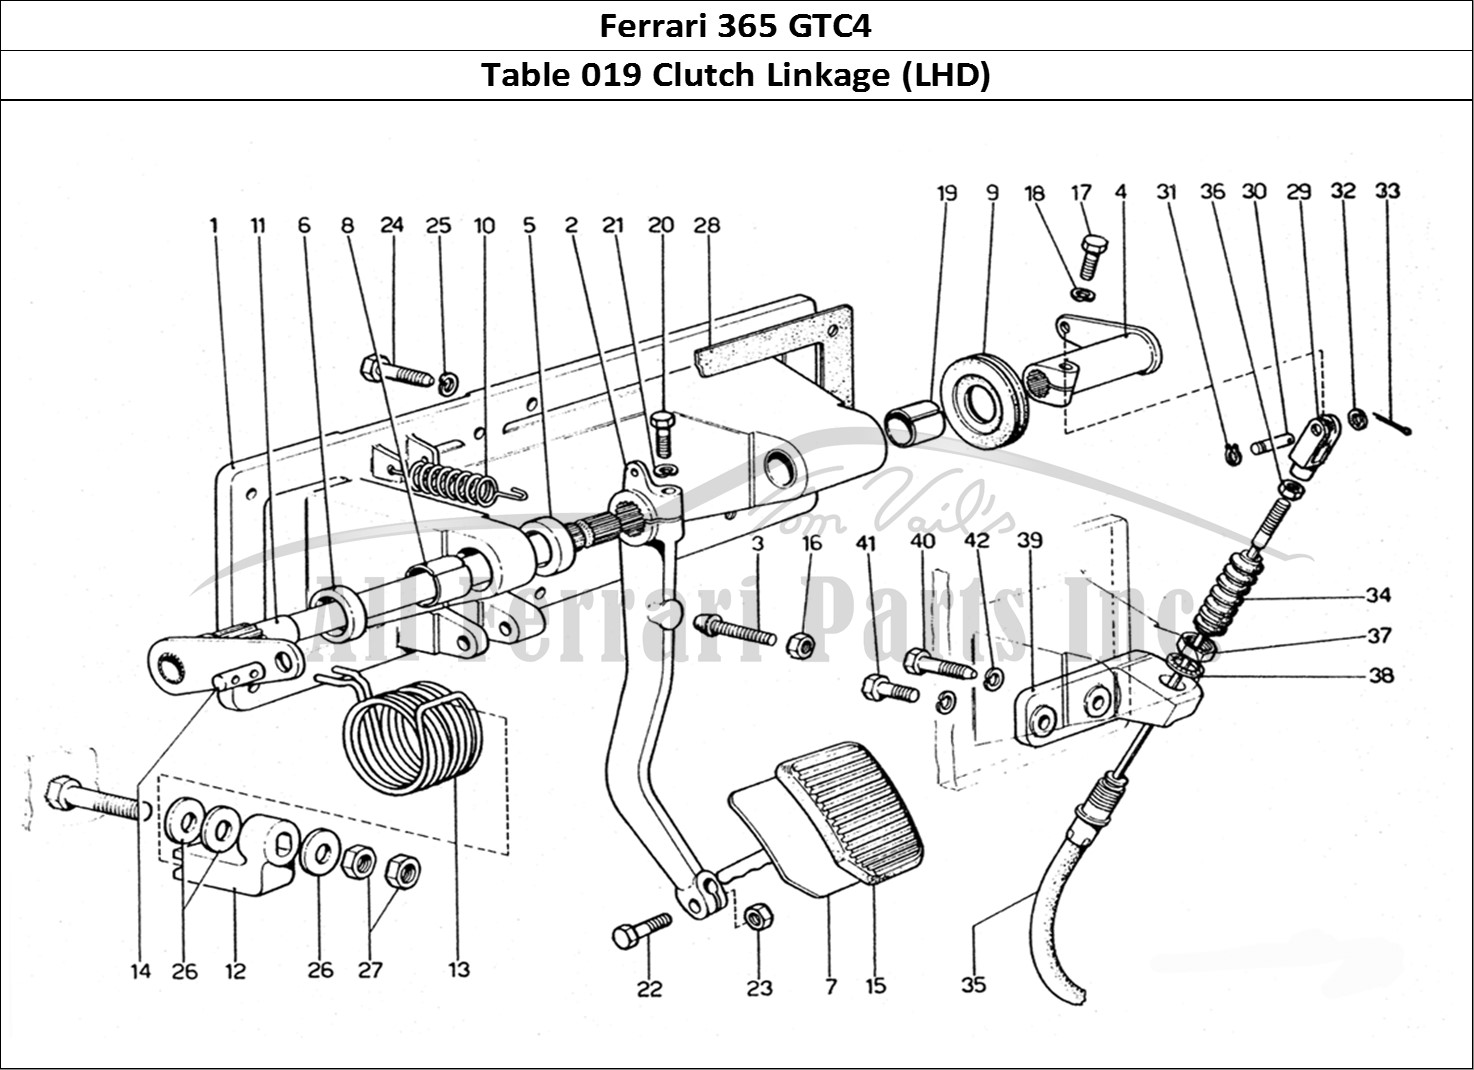 Ferrari Parts Ferrari 365 GTC4 (Mechanical) Page 019 Clutch pedal (LHD)